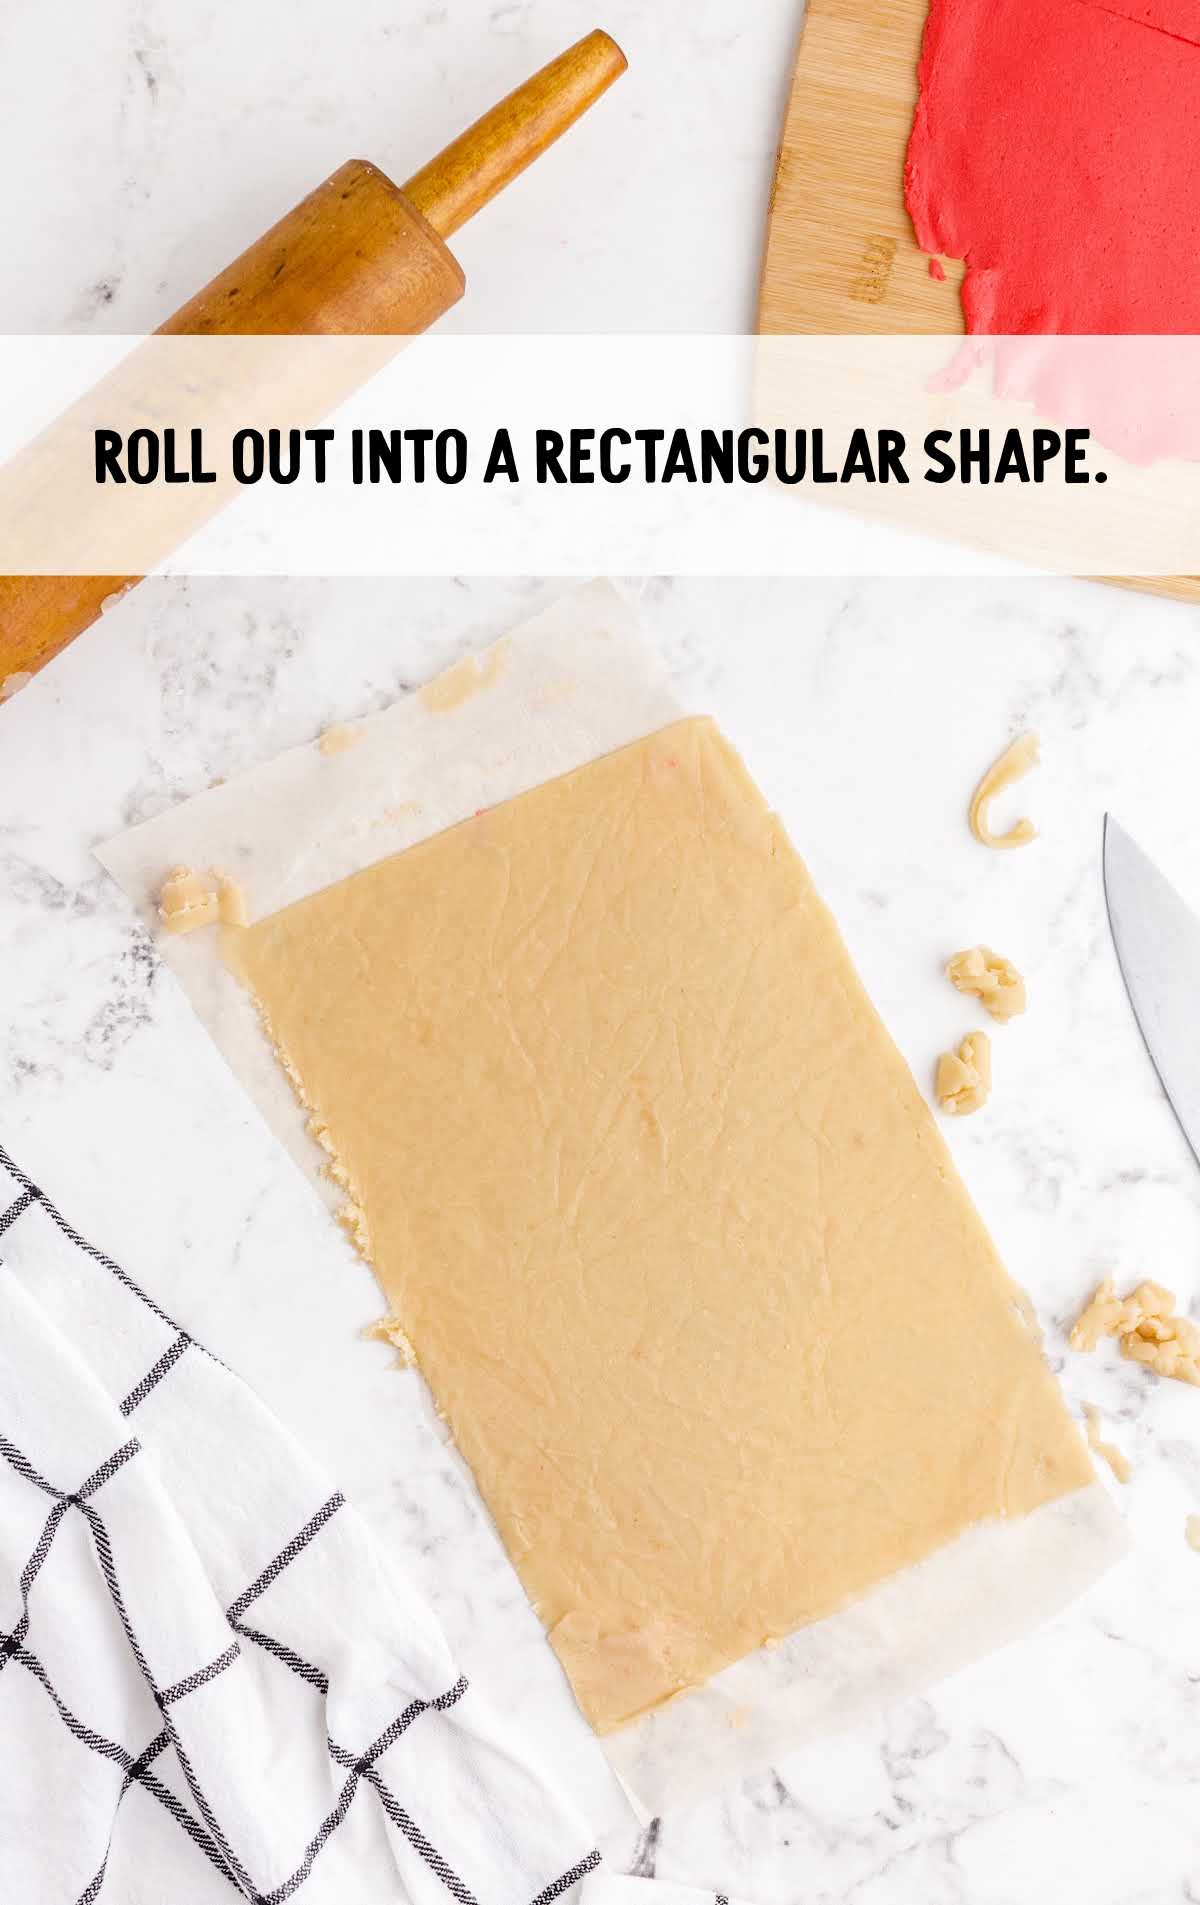 Roll out dough into rectangular sharpe